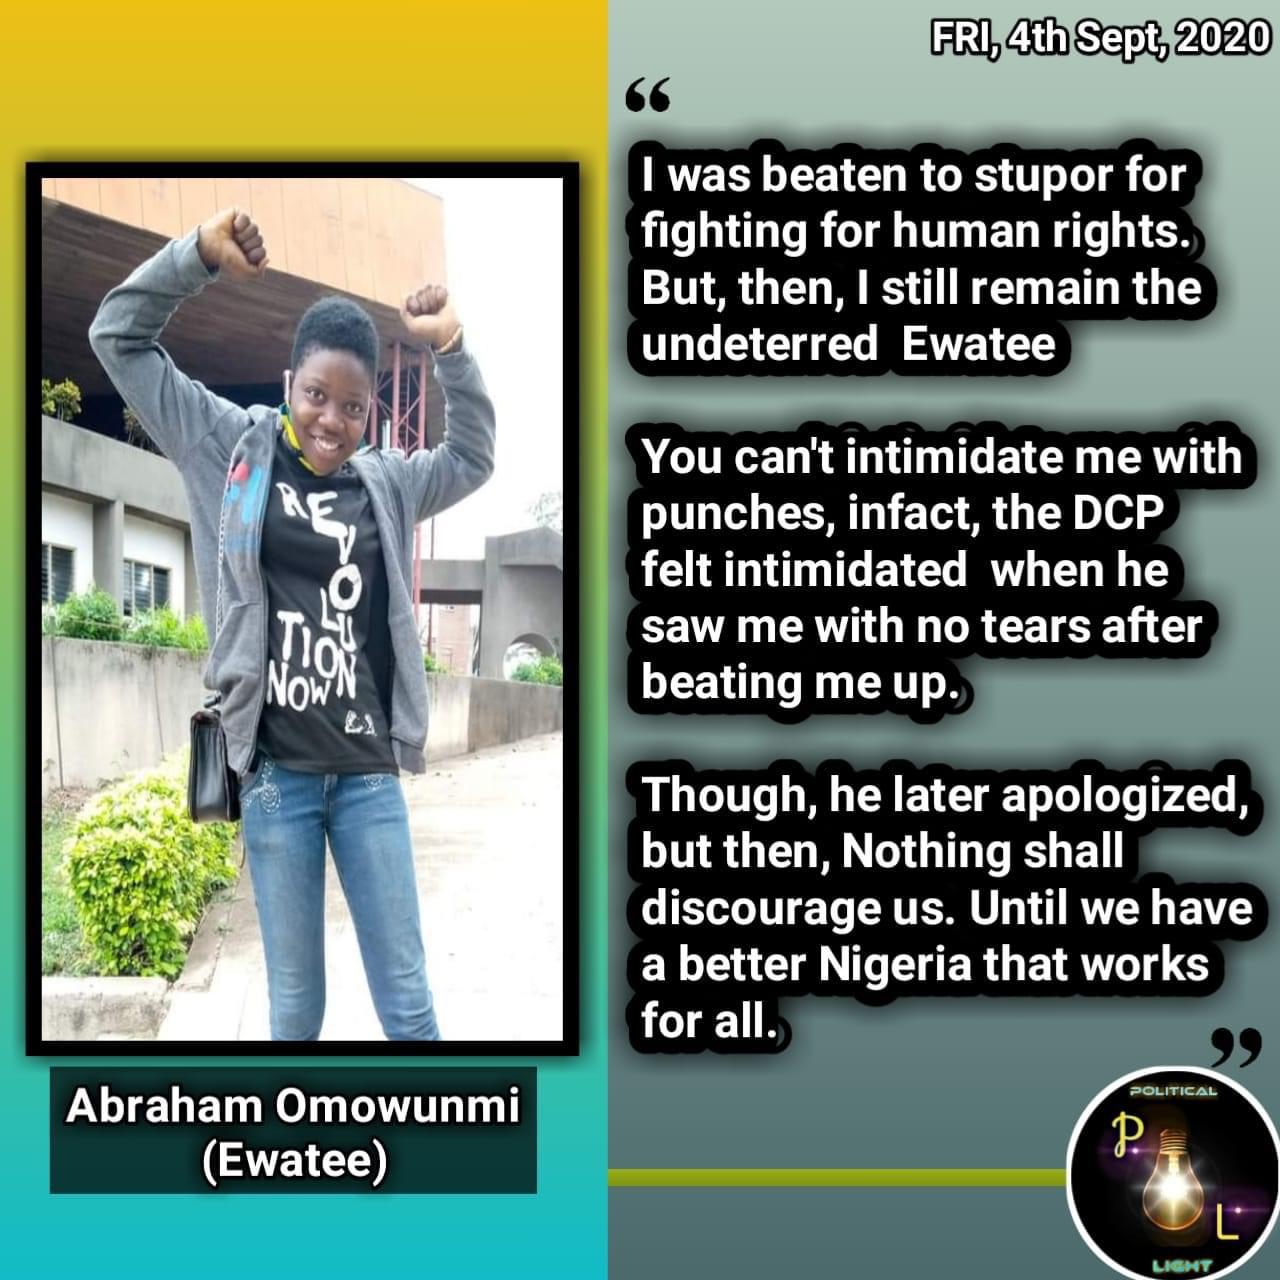 Nigerian youths awakening to fight injustice